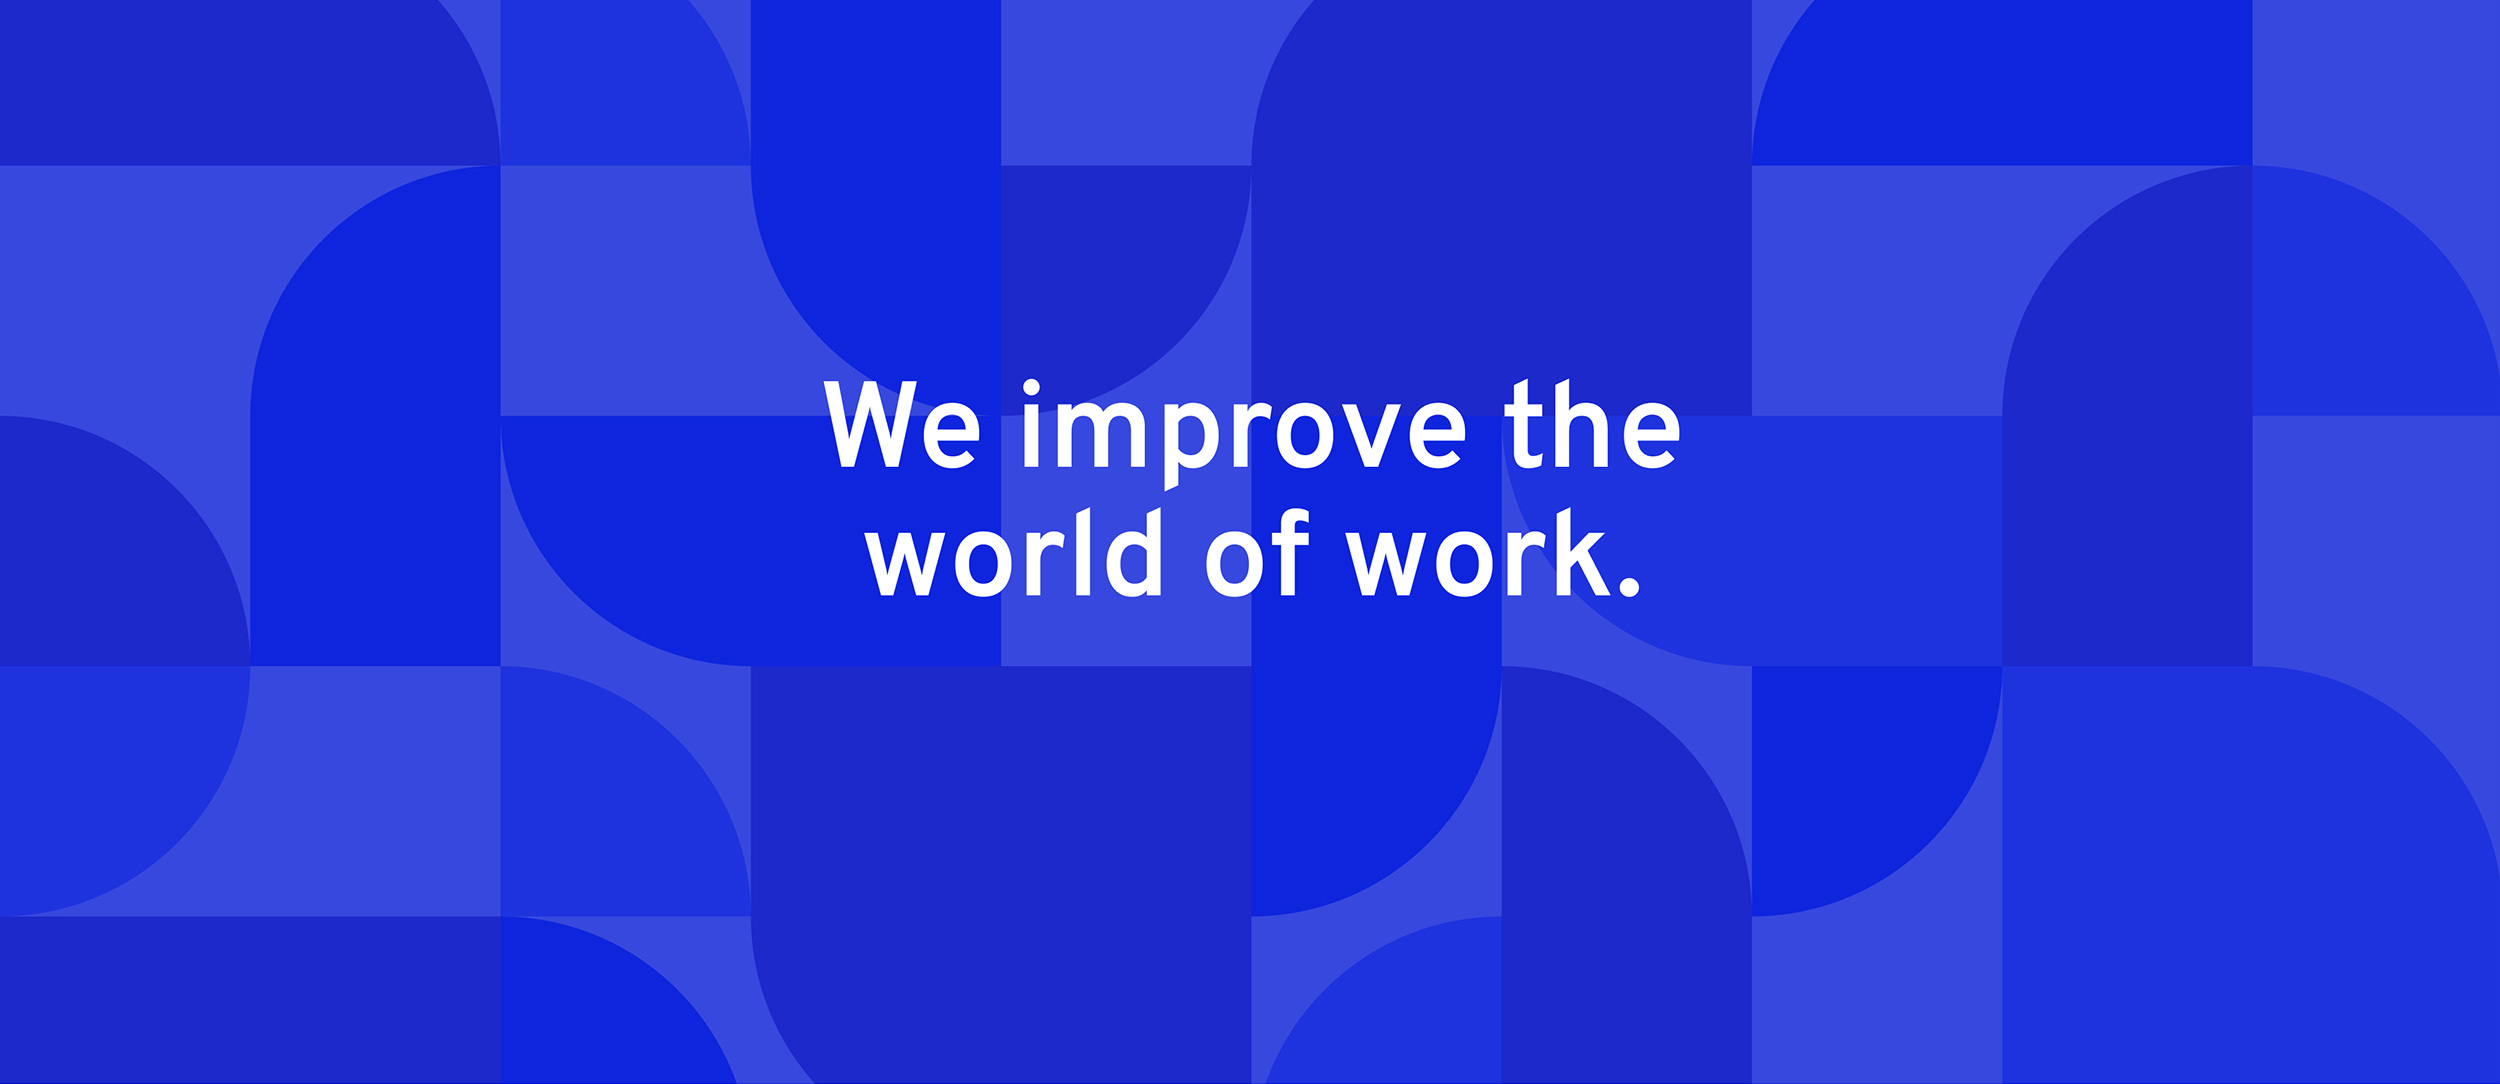 We improve the world of work